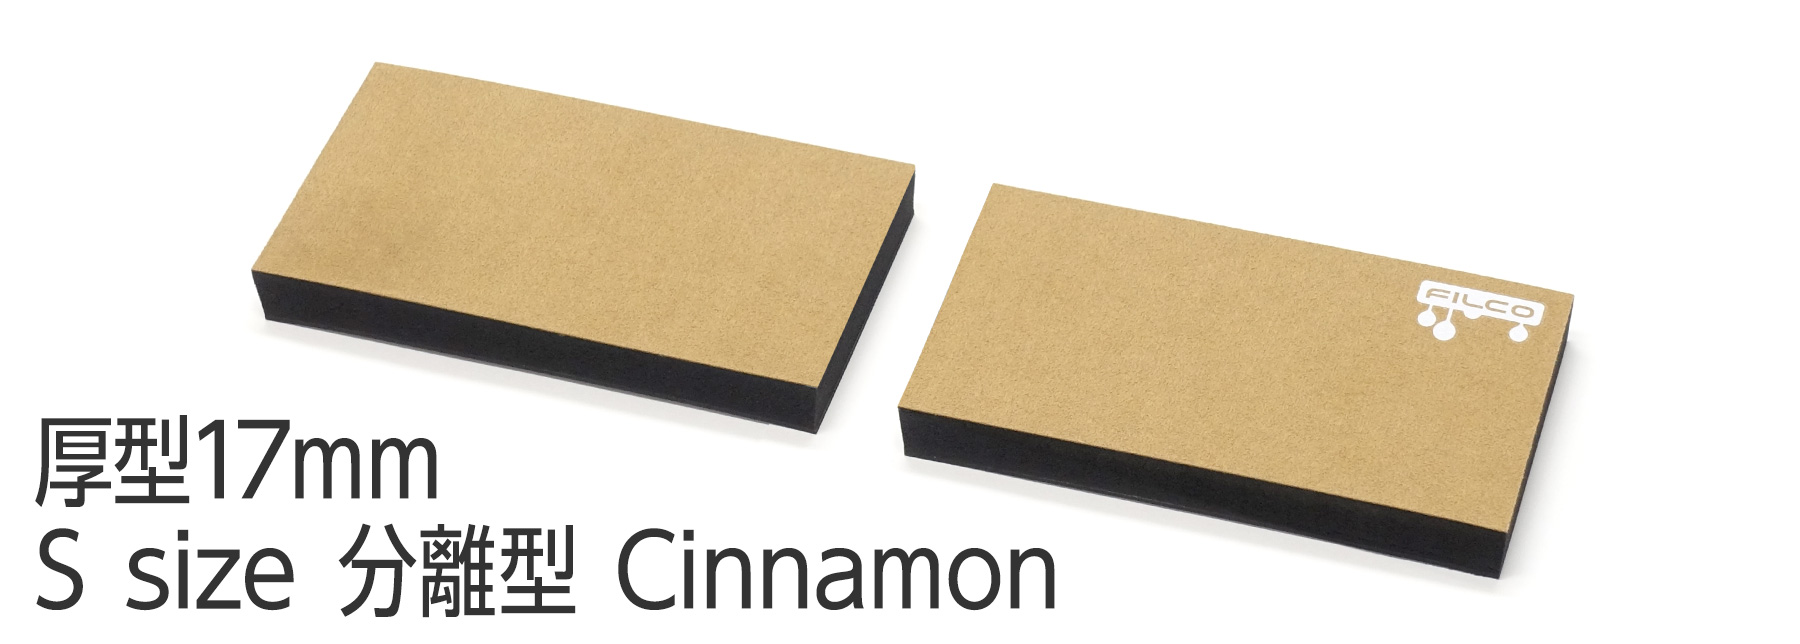 FILCO Majestouch Wrist Rest "Macaron" 厚型17mm・Ｓサイズ・分離型(2分割)・Cinnamon